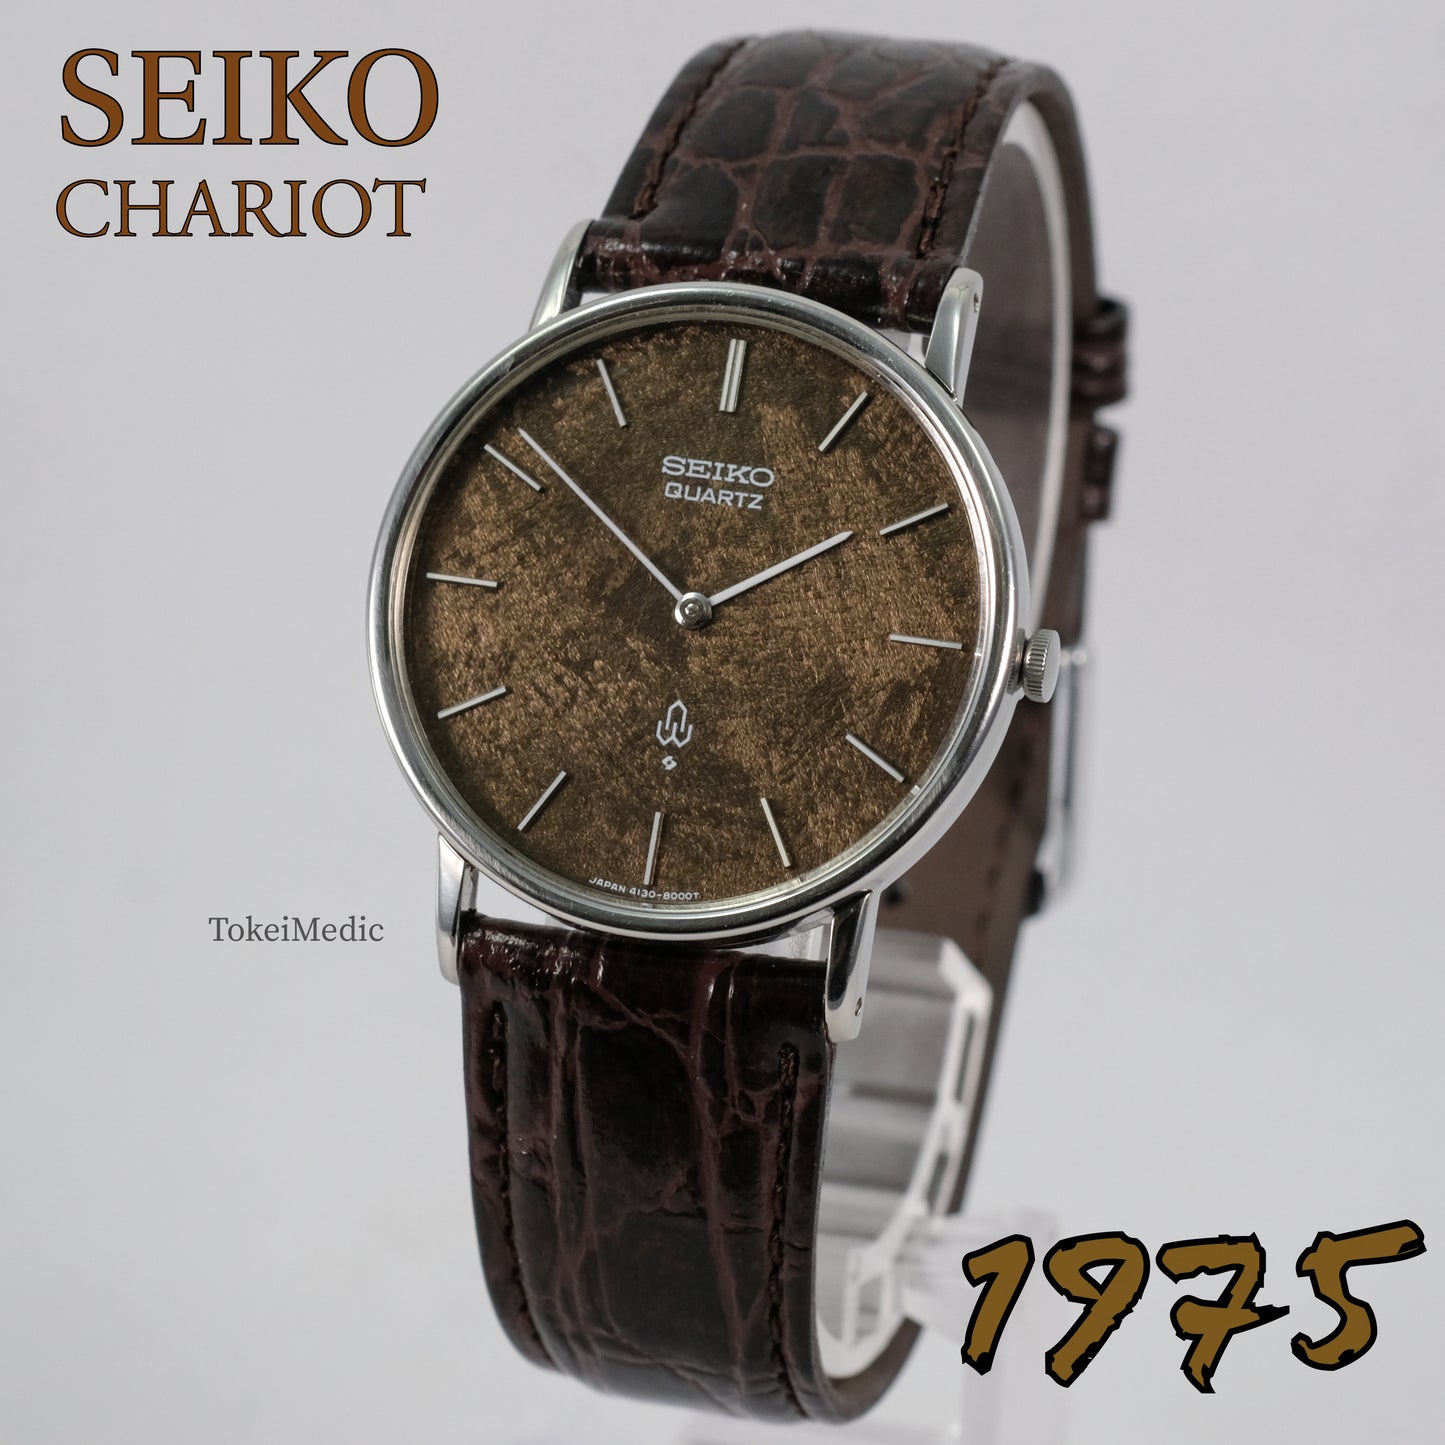 1975 Seiko Chariot 4130-8000